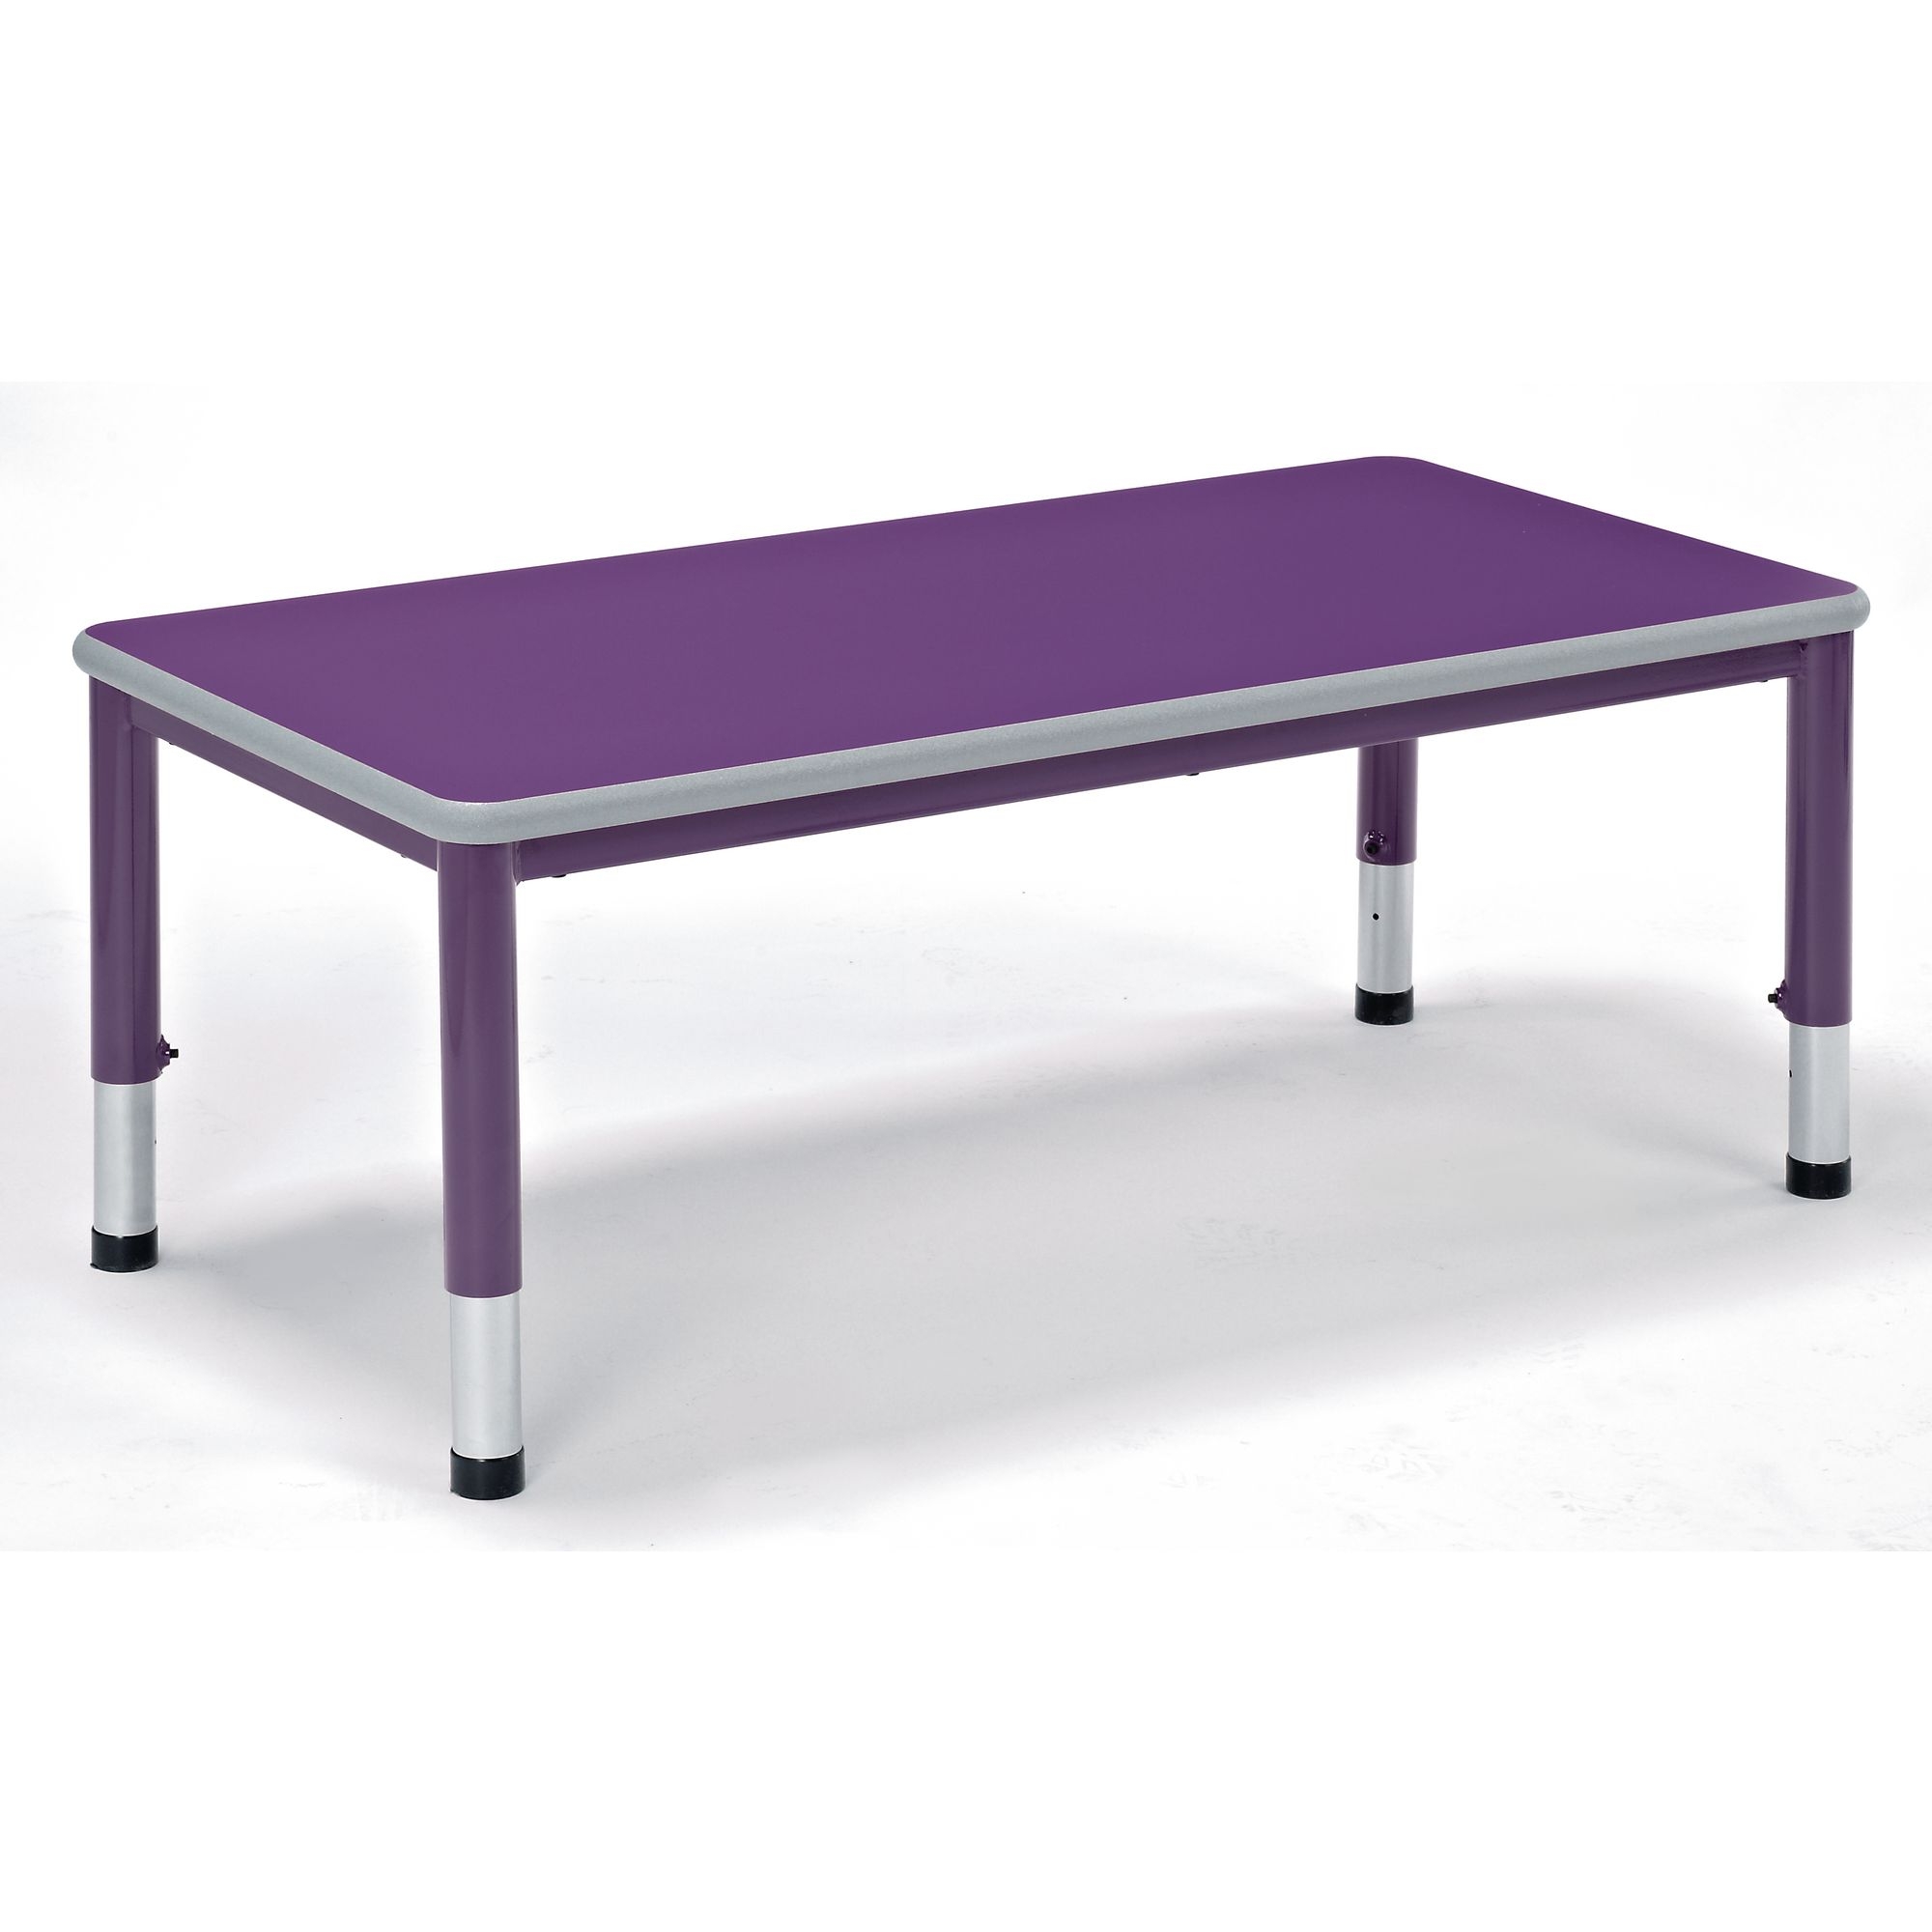 Harlequin Rectangular Height Adjustable Steel Classroom Table - 1200 x 600 x 600mm - Purple